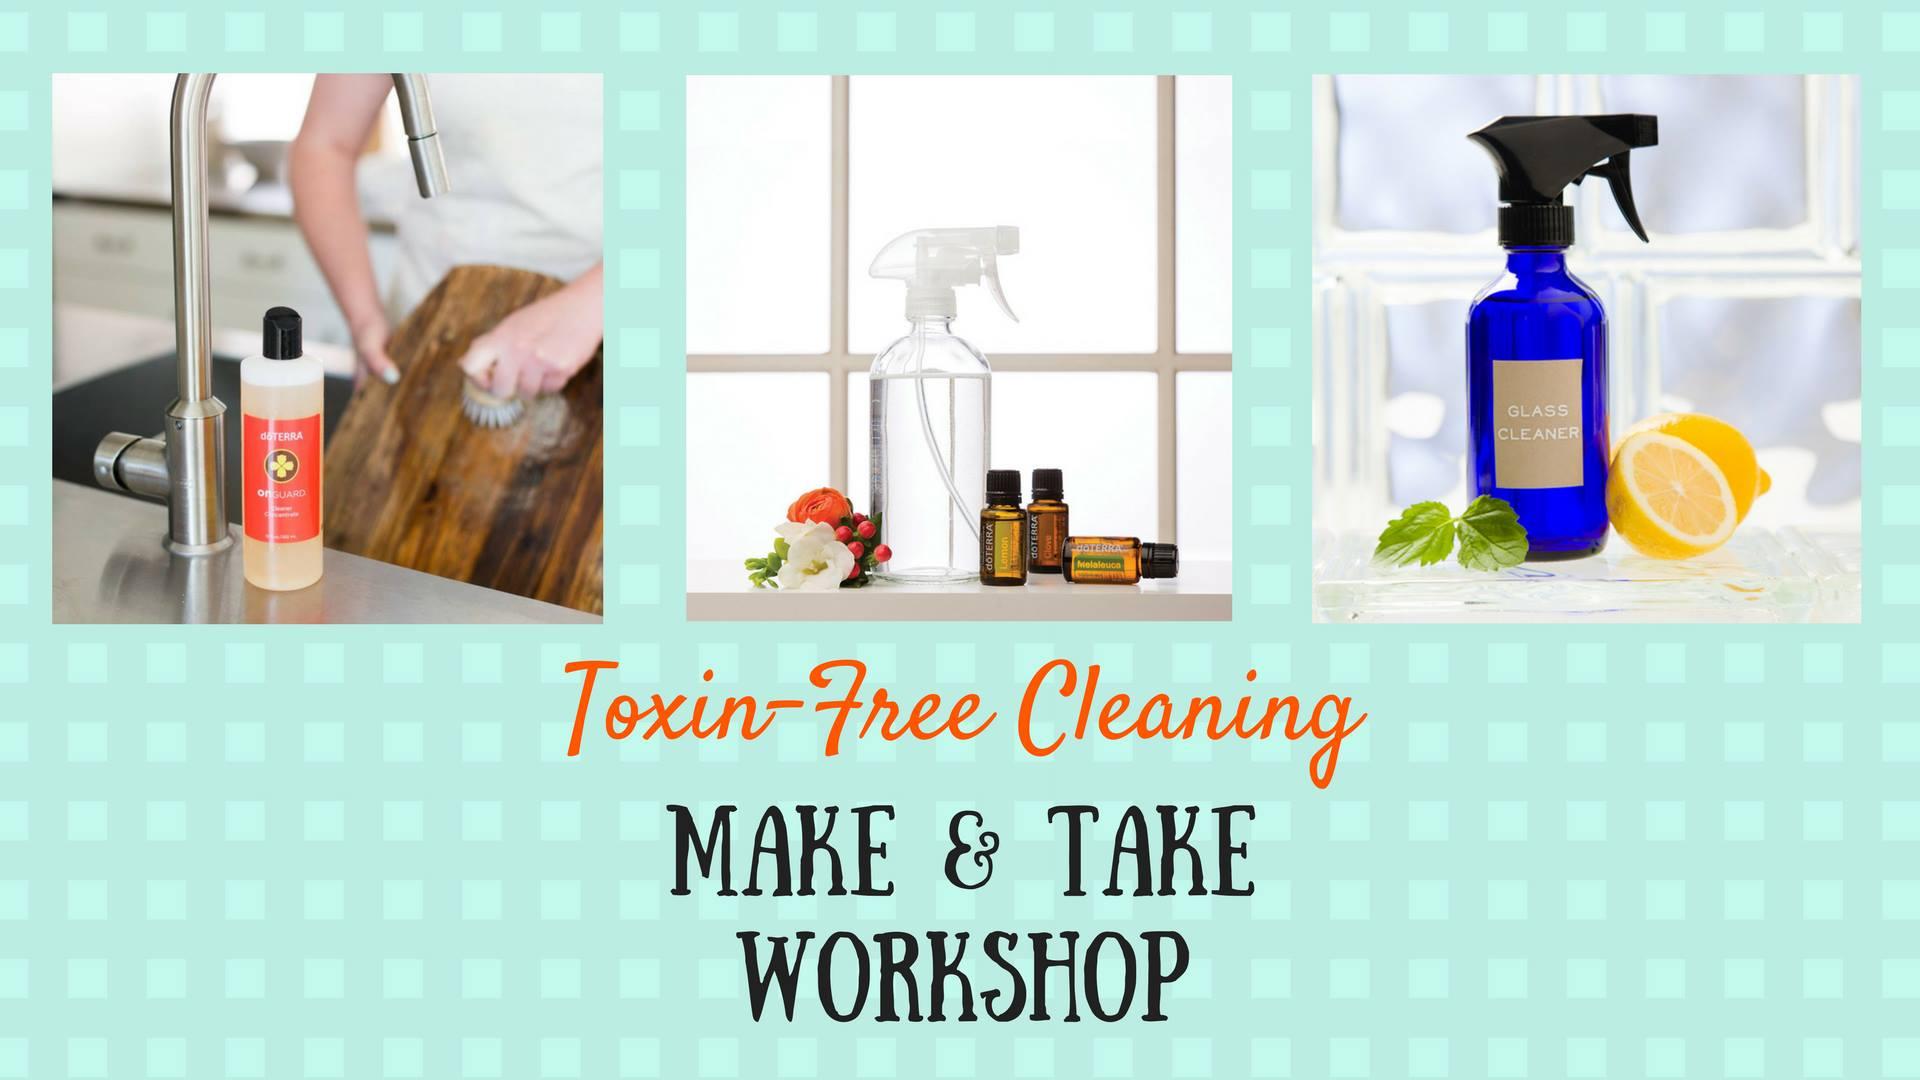 Toxin-Free Cleaning Make & Take Workshop